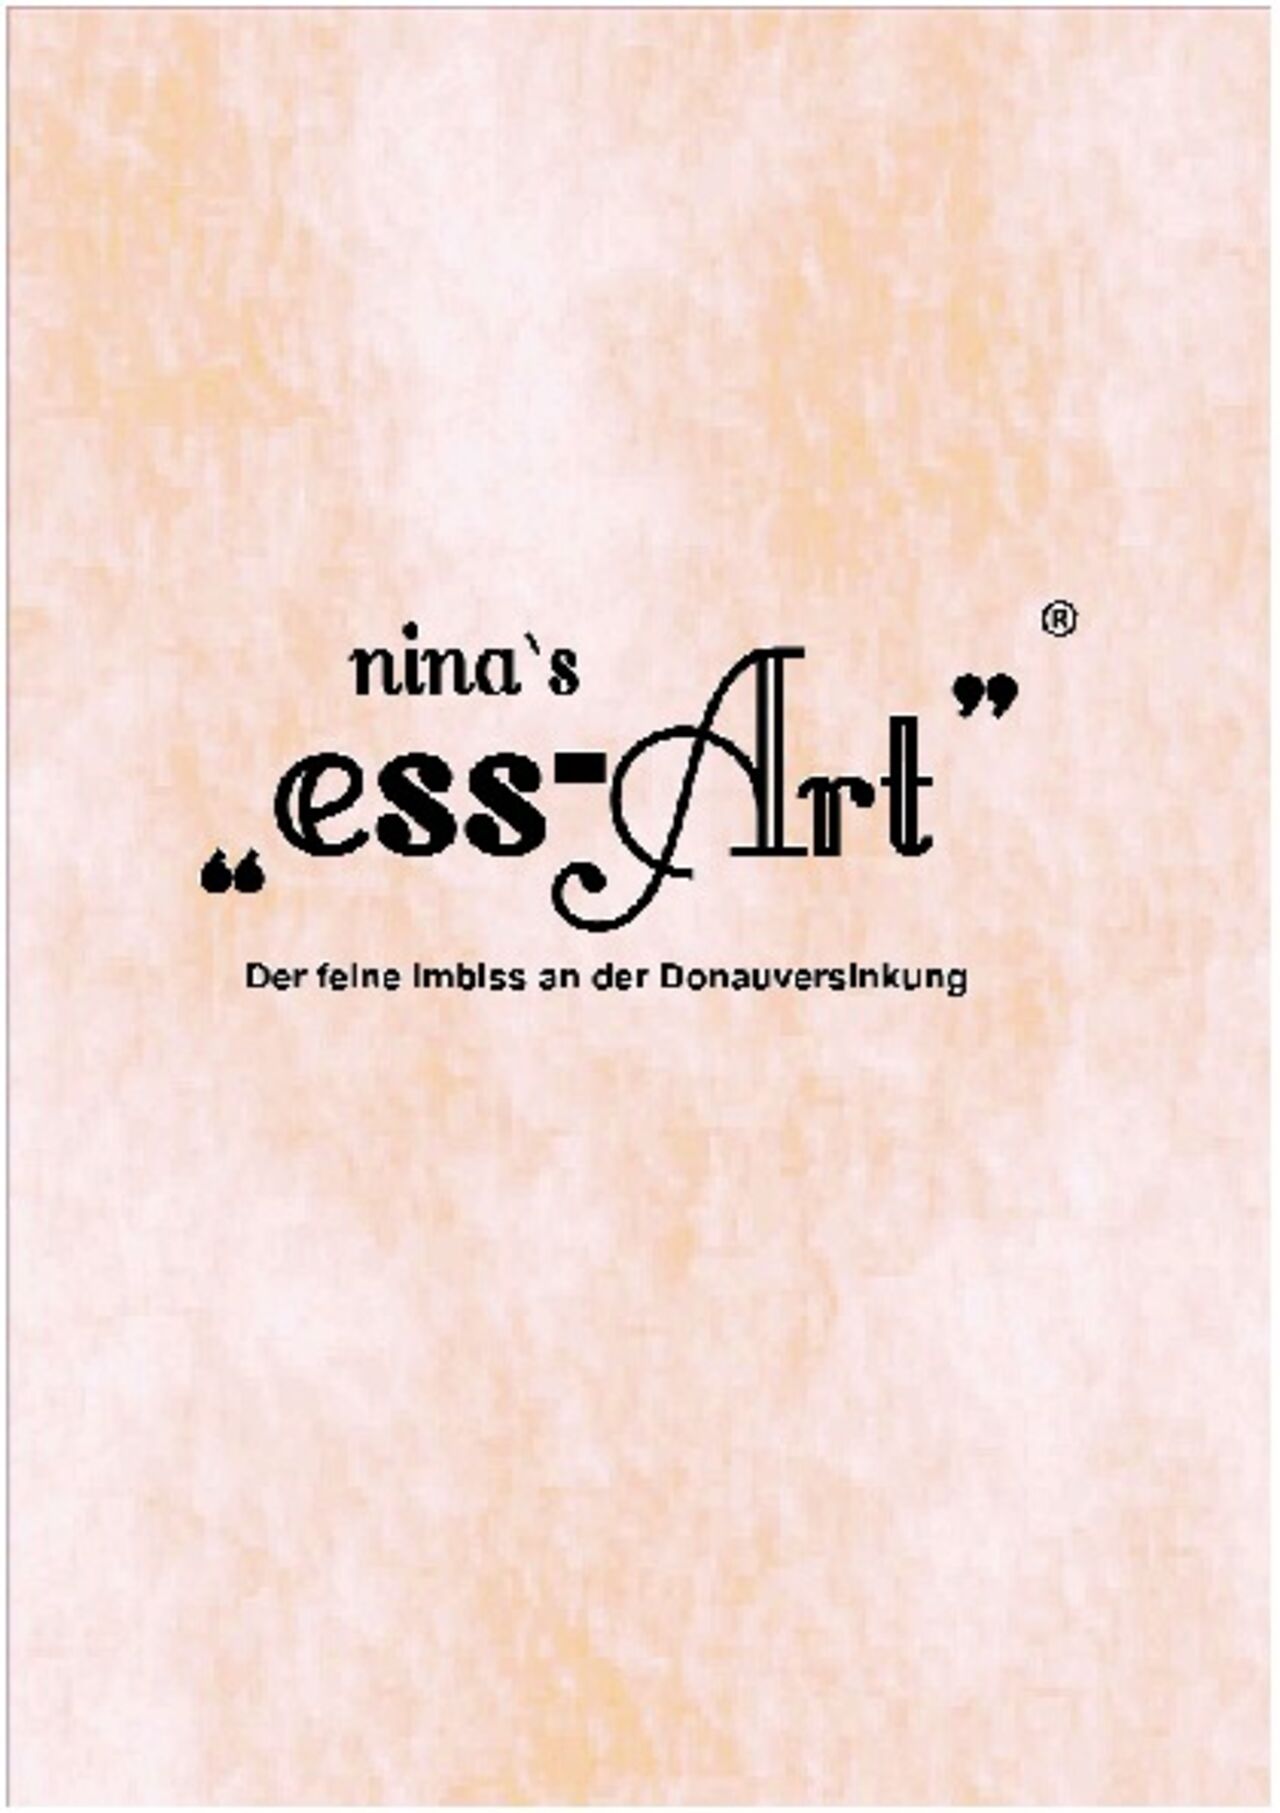 A photo of Nina's Ess Art